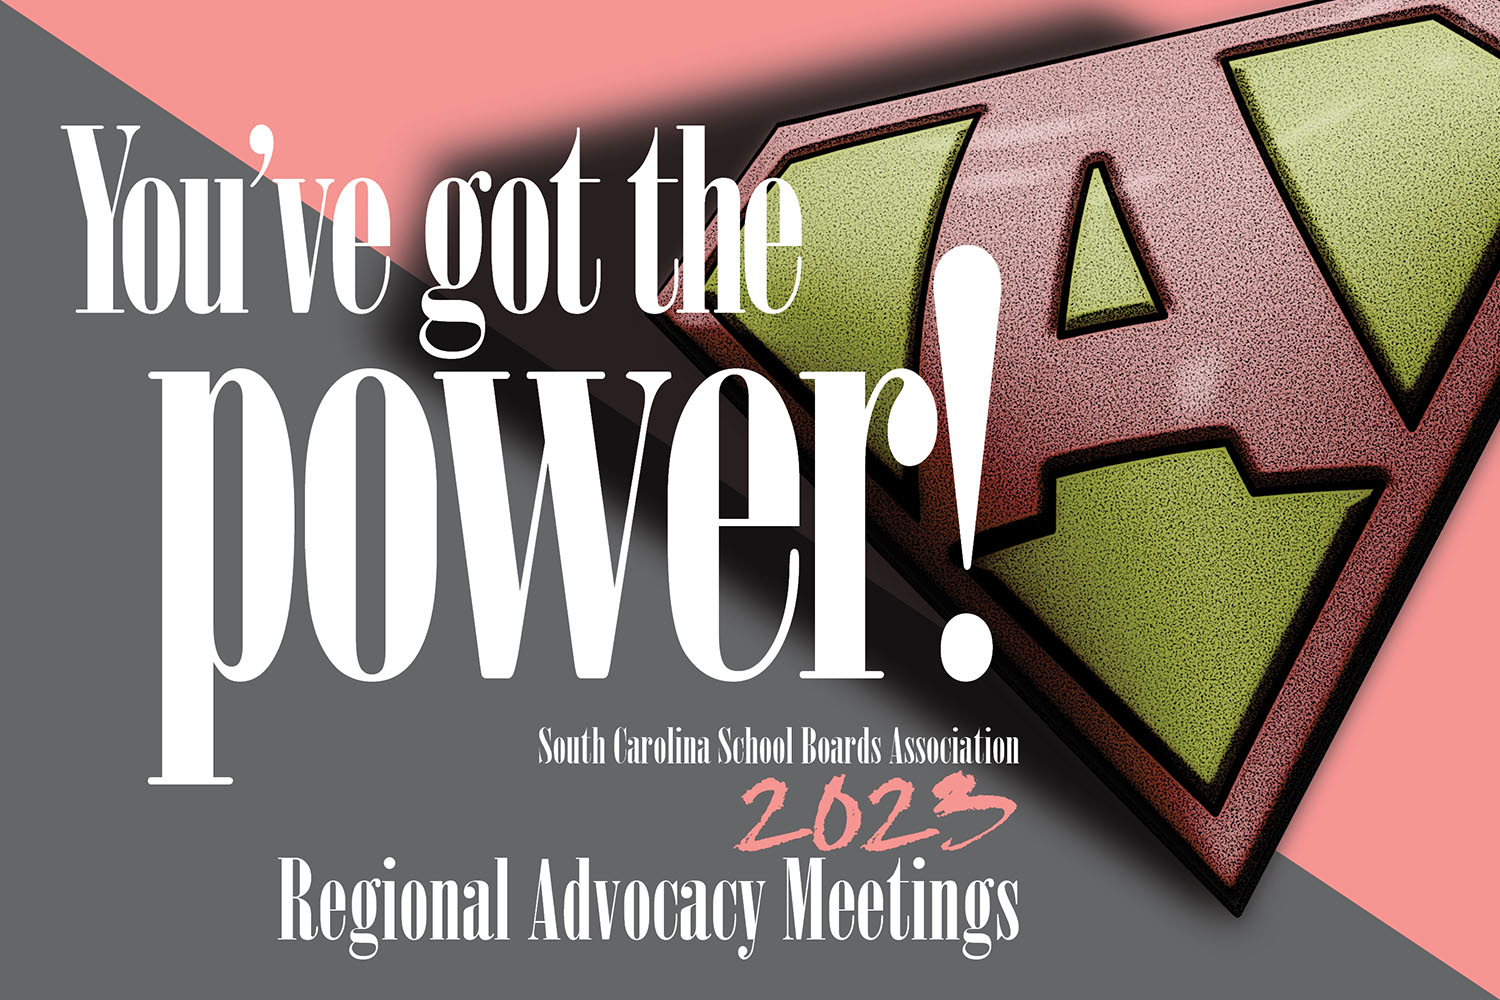 2023 REGIONAL ADVOCACY MEETINGS